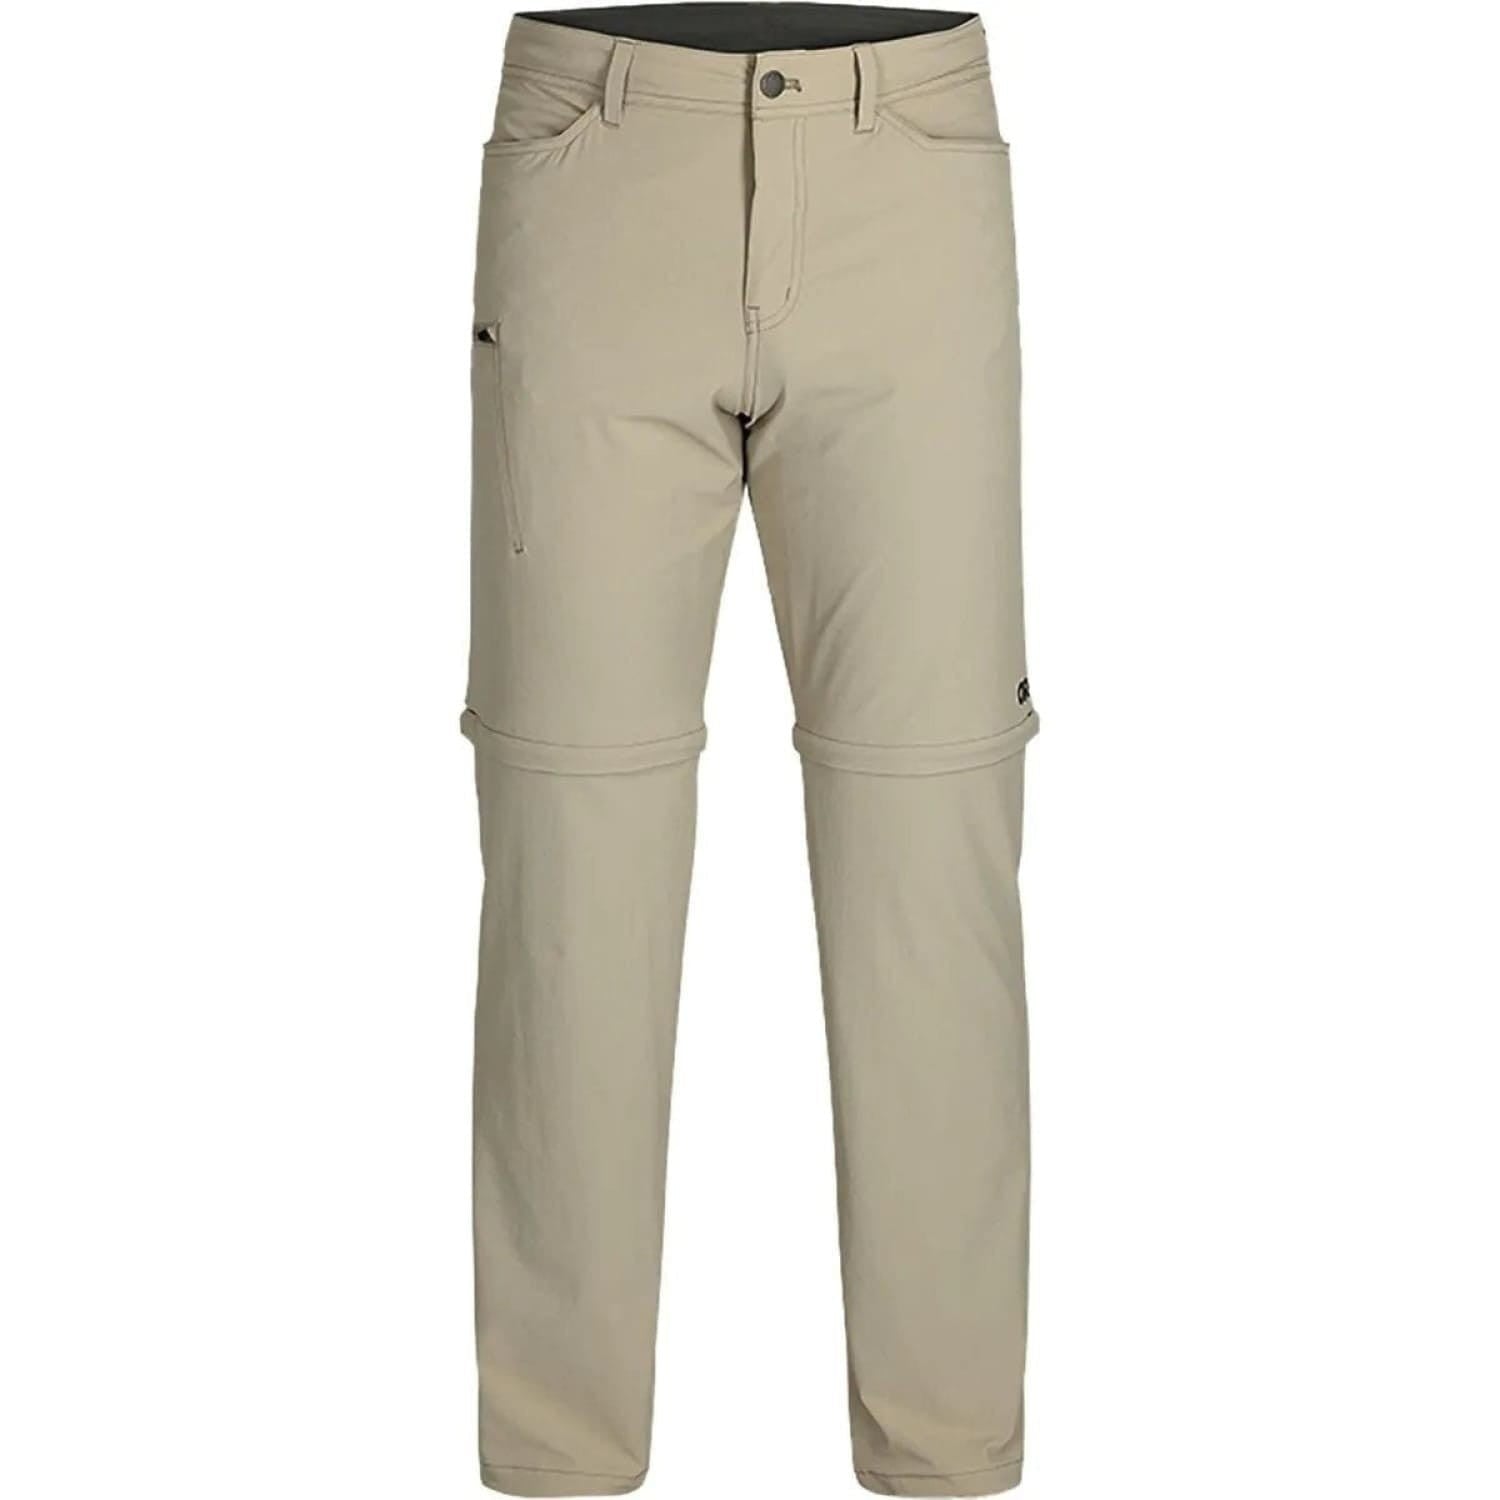 Outdoor Research Men's Ferrosi Convertible Pants Flat View